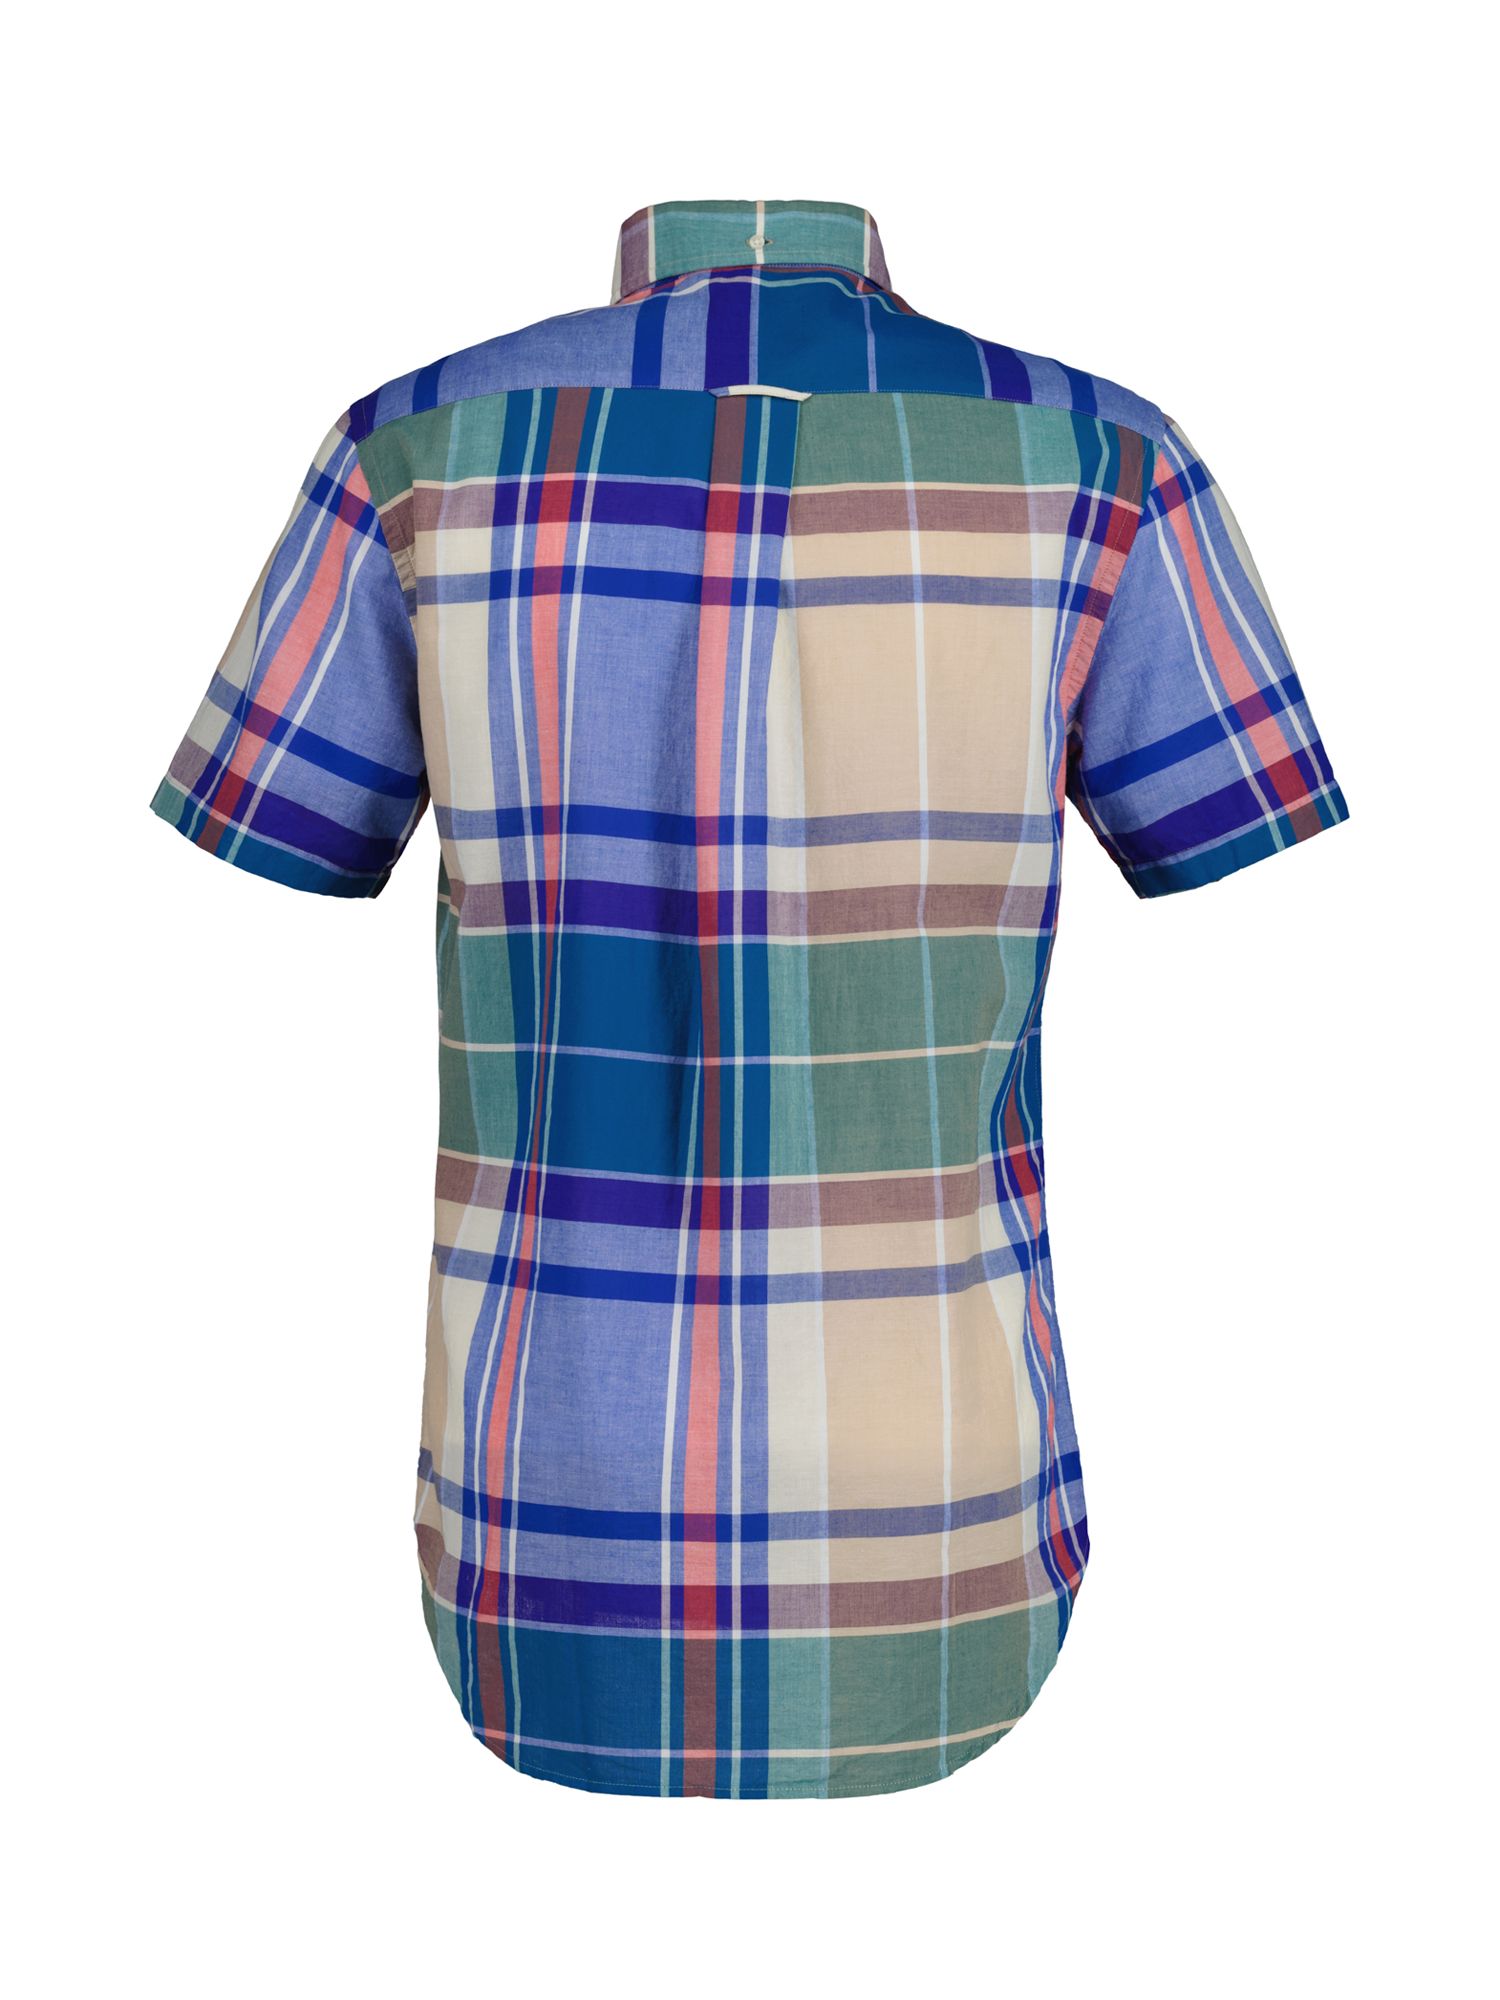 Buy GANT Madras Short Sleeve Shirt, Blue/Multi Online at johnlewis.com